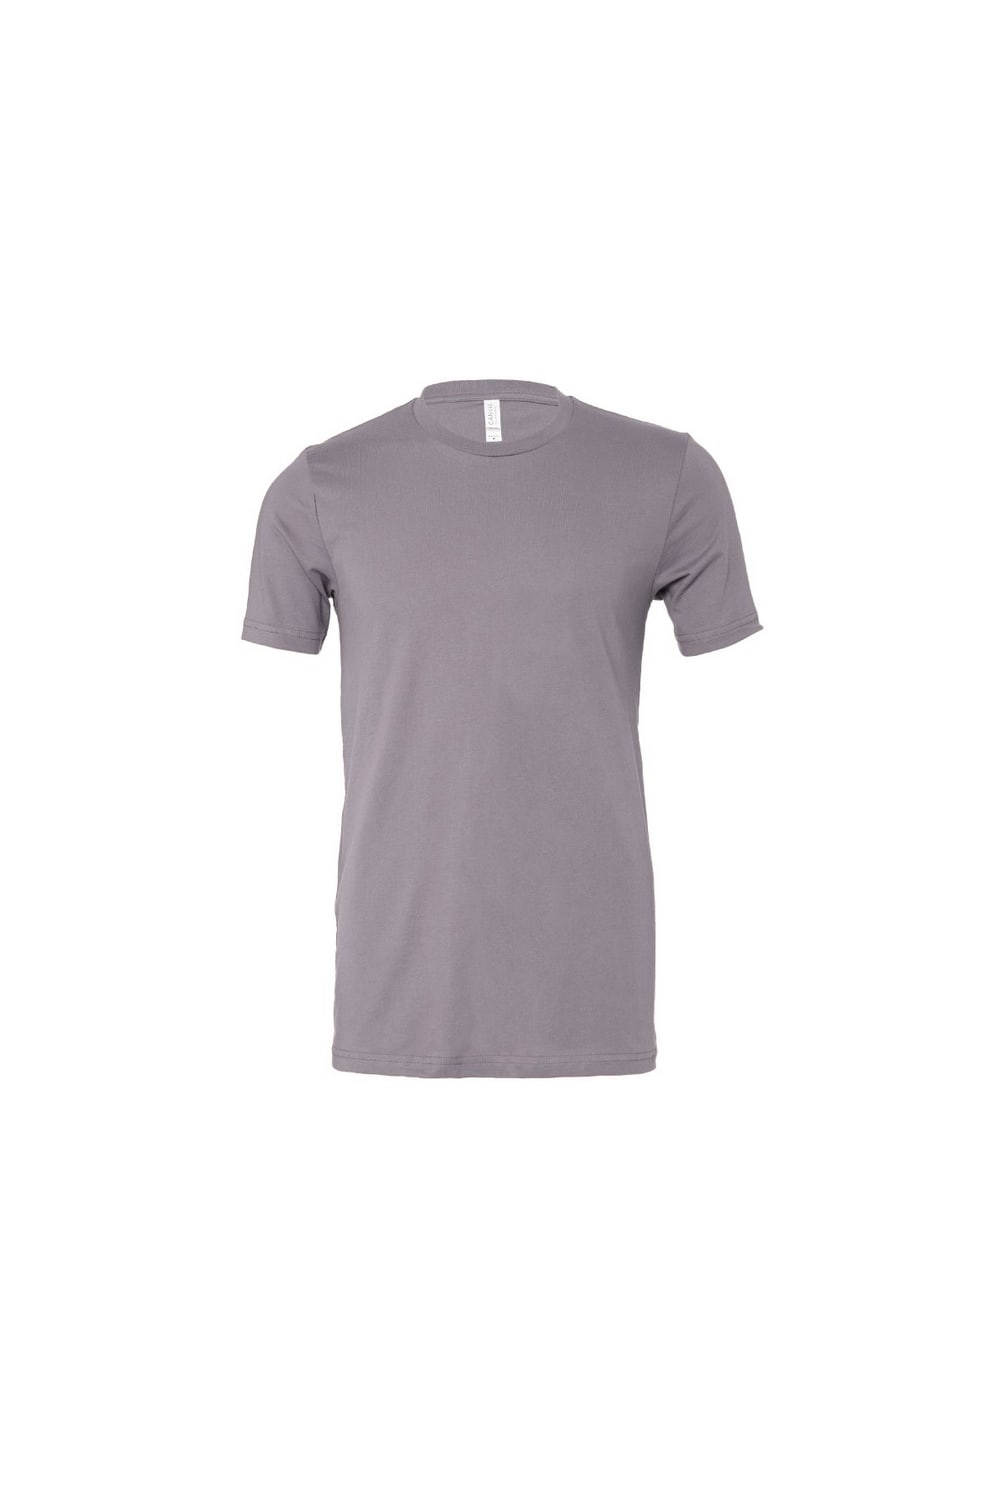 Unisex Jersey Crew Neck Short Sleeve T-Shirt - Storm Gray